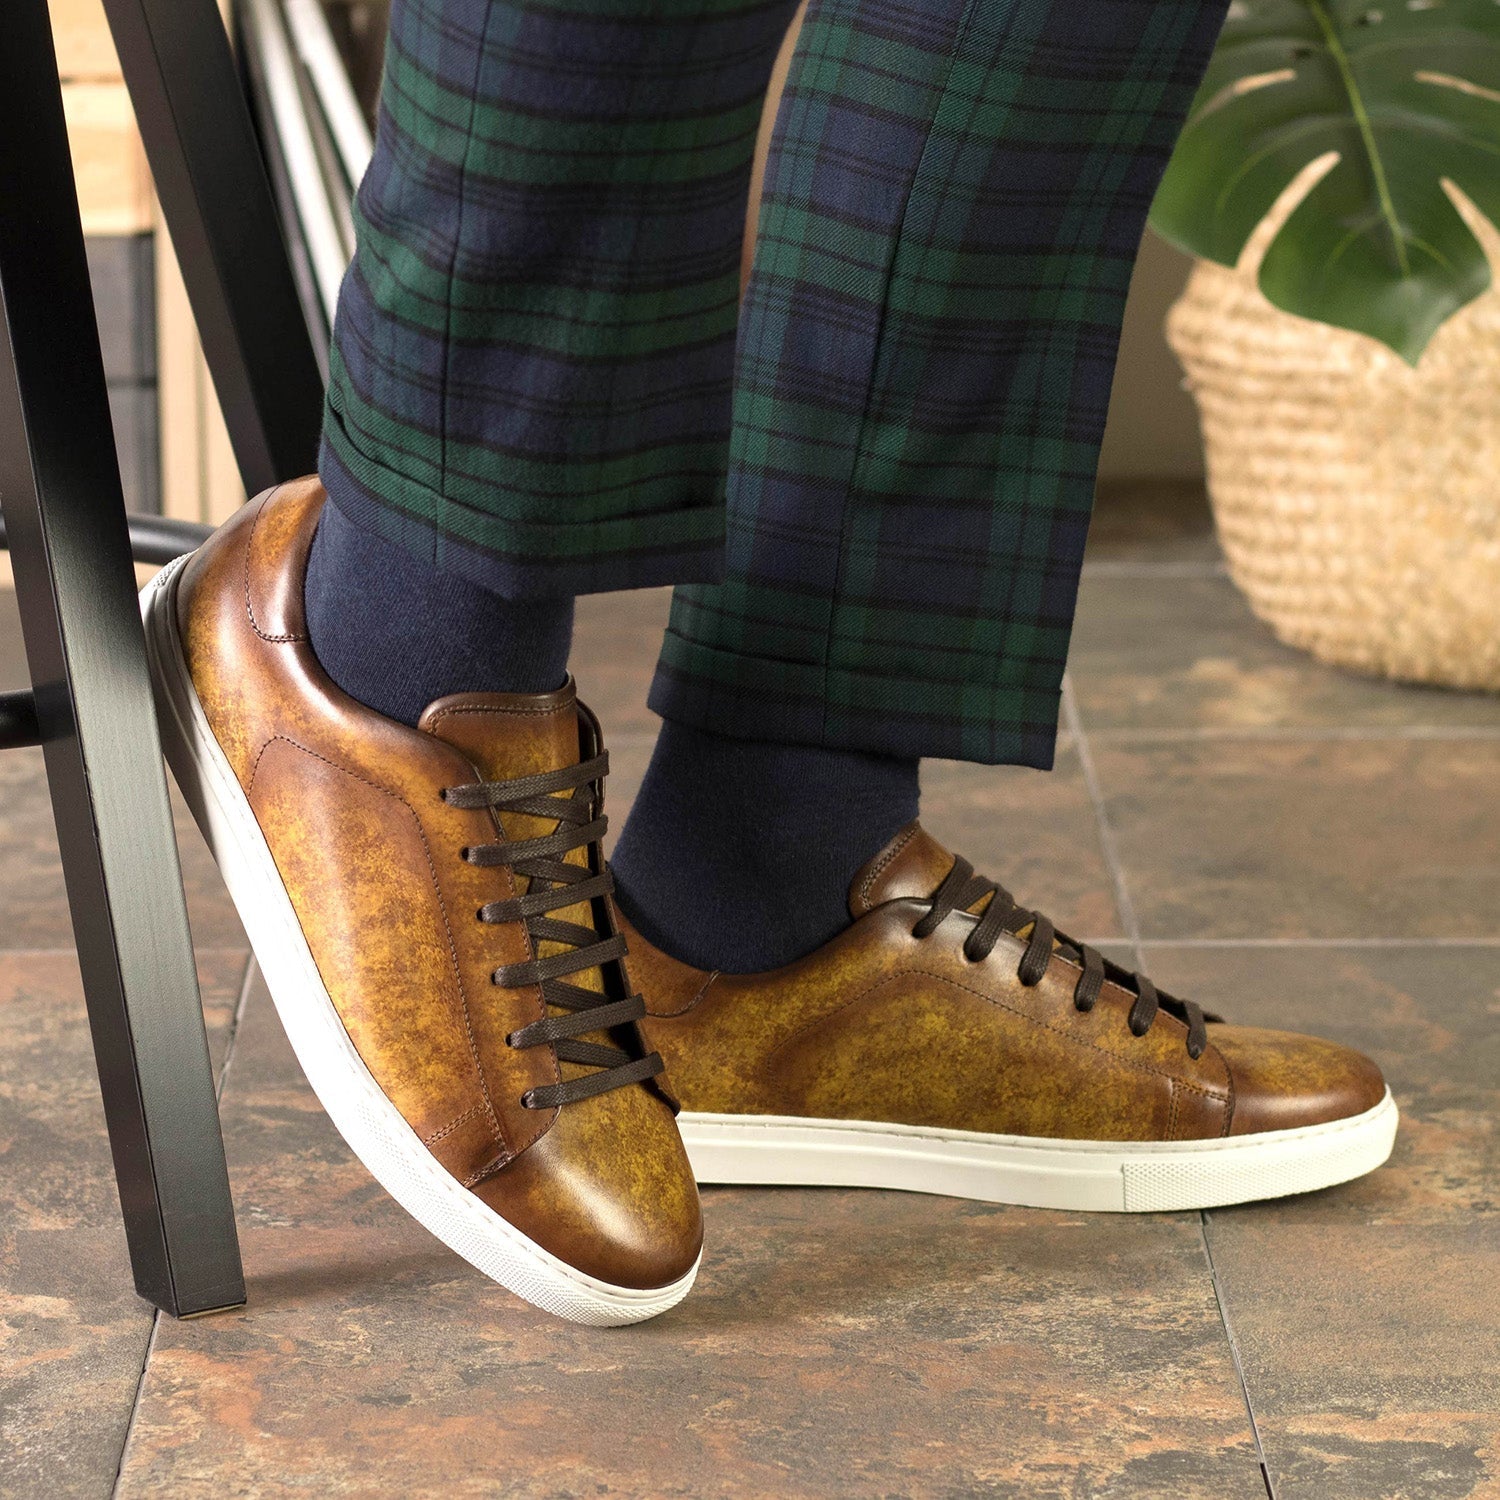 Ambrogio Bespoke Men's Handmade Custom Shoes Khaki, Denim & Fire Patina Leather Trainer Sneakers (AMB1831)